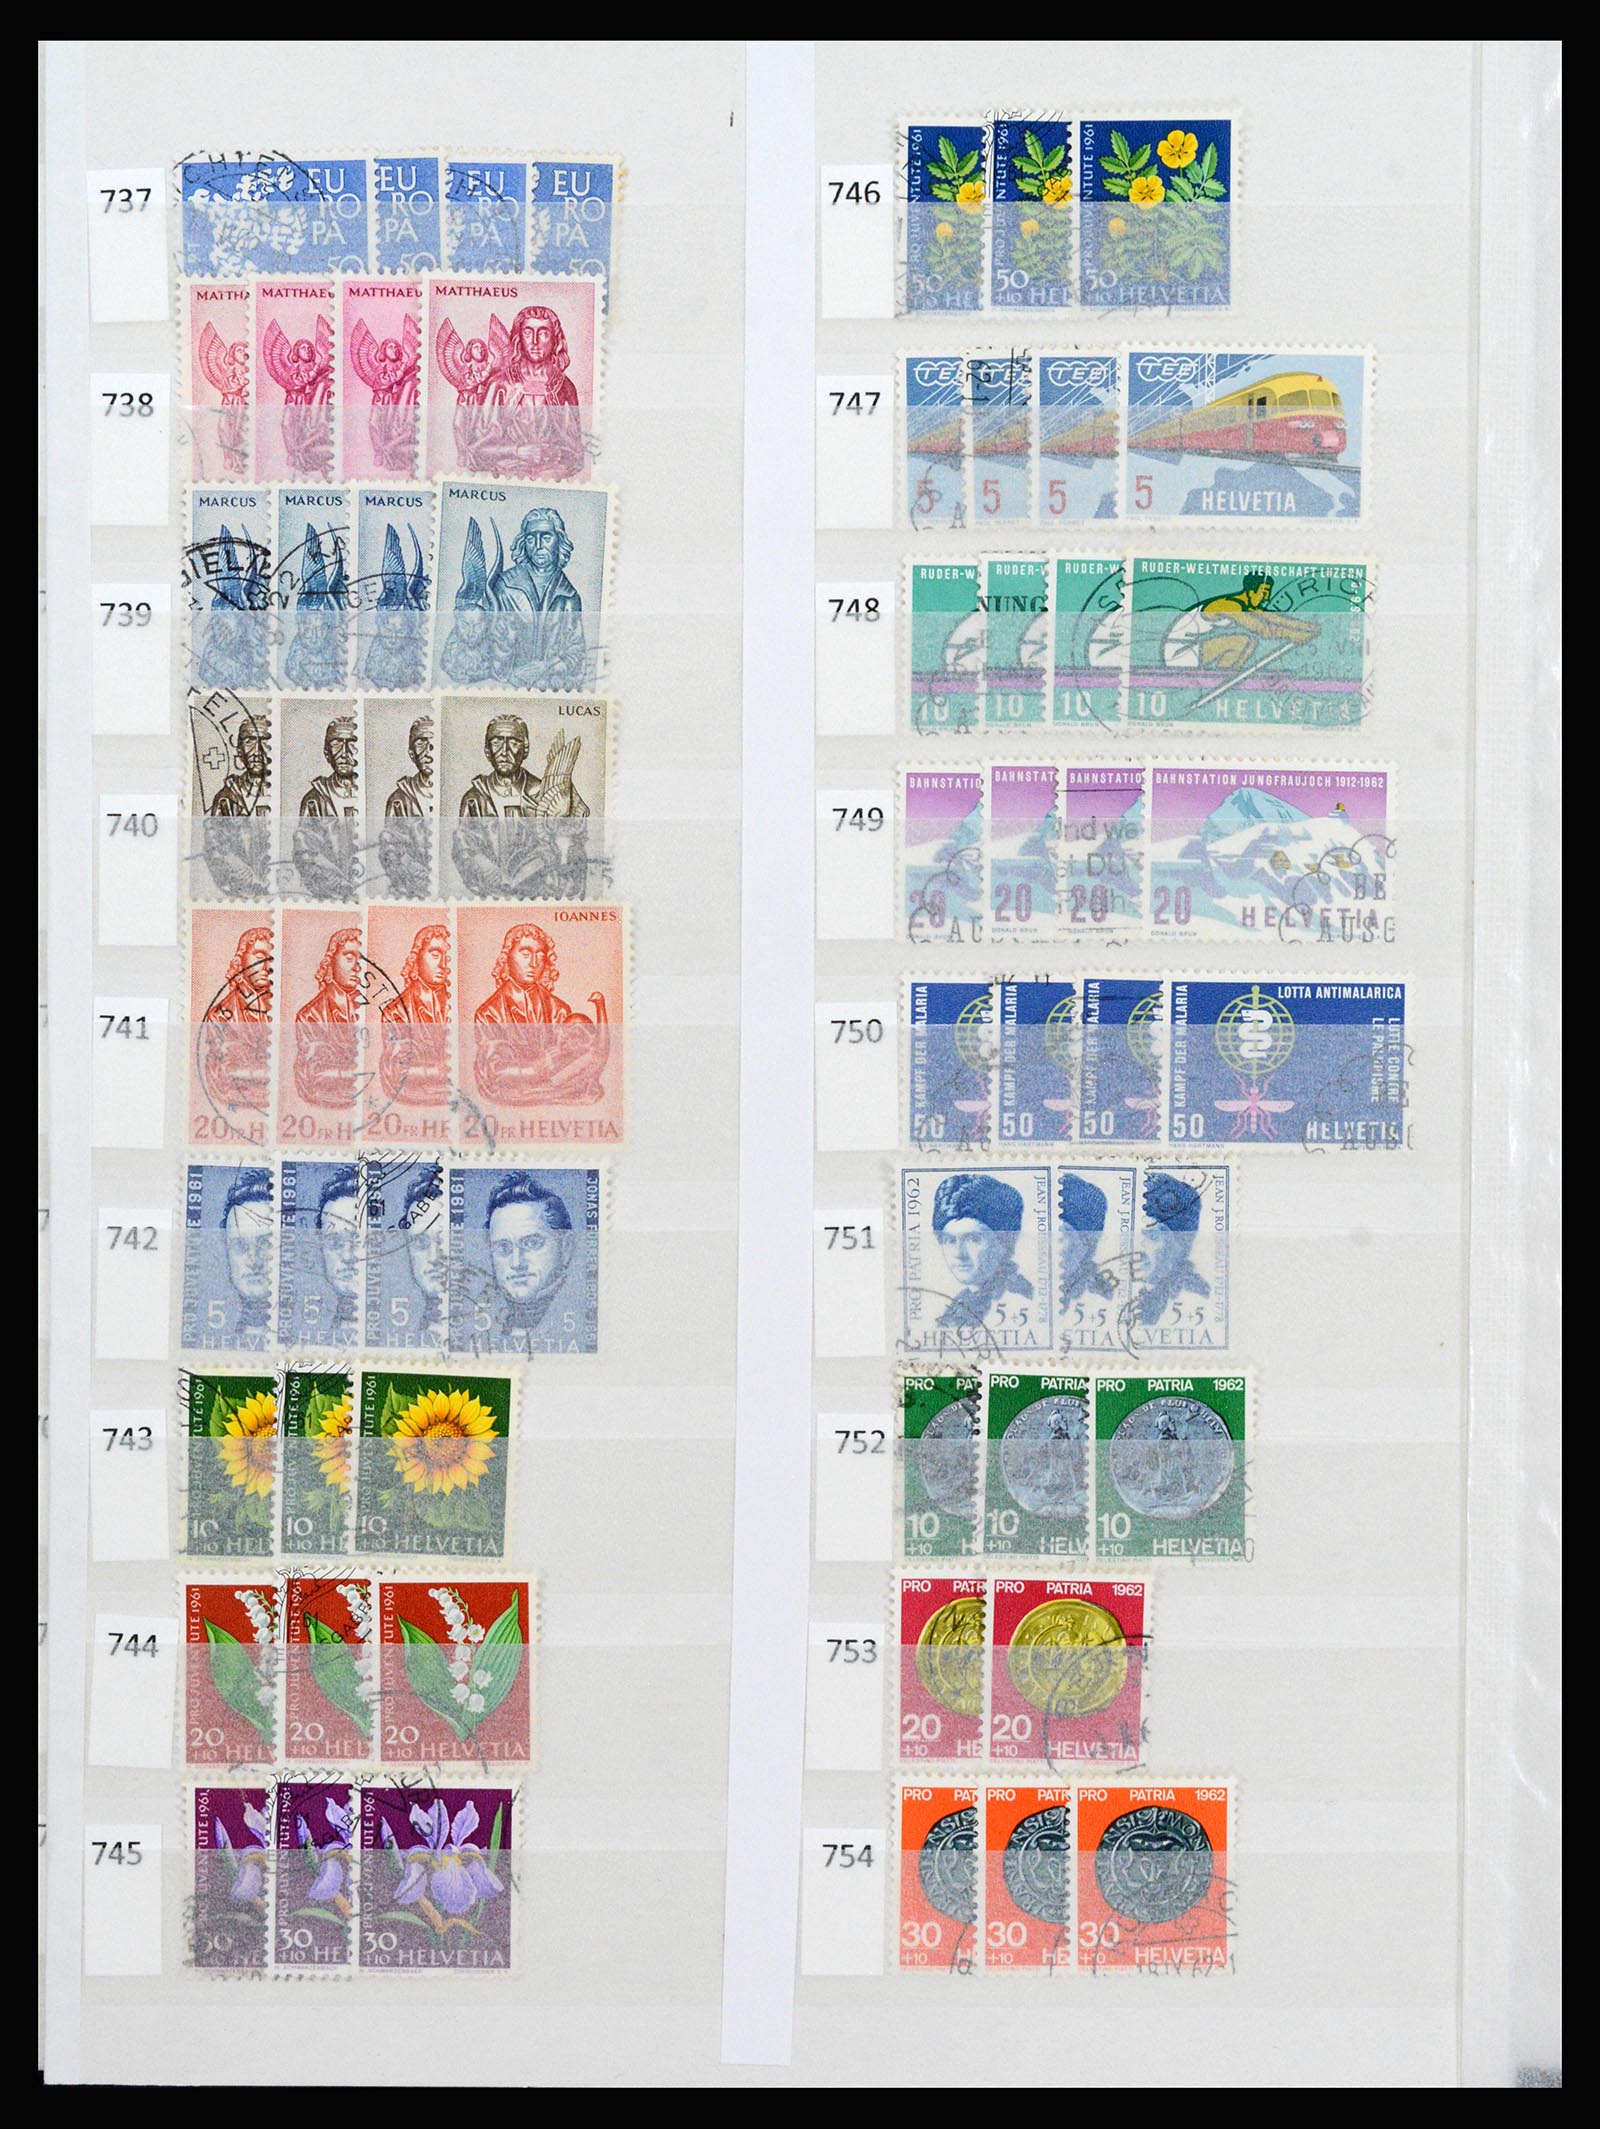 37252 039 - Stamp collection 37252 Switzerland 1900-2011.